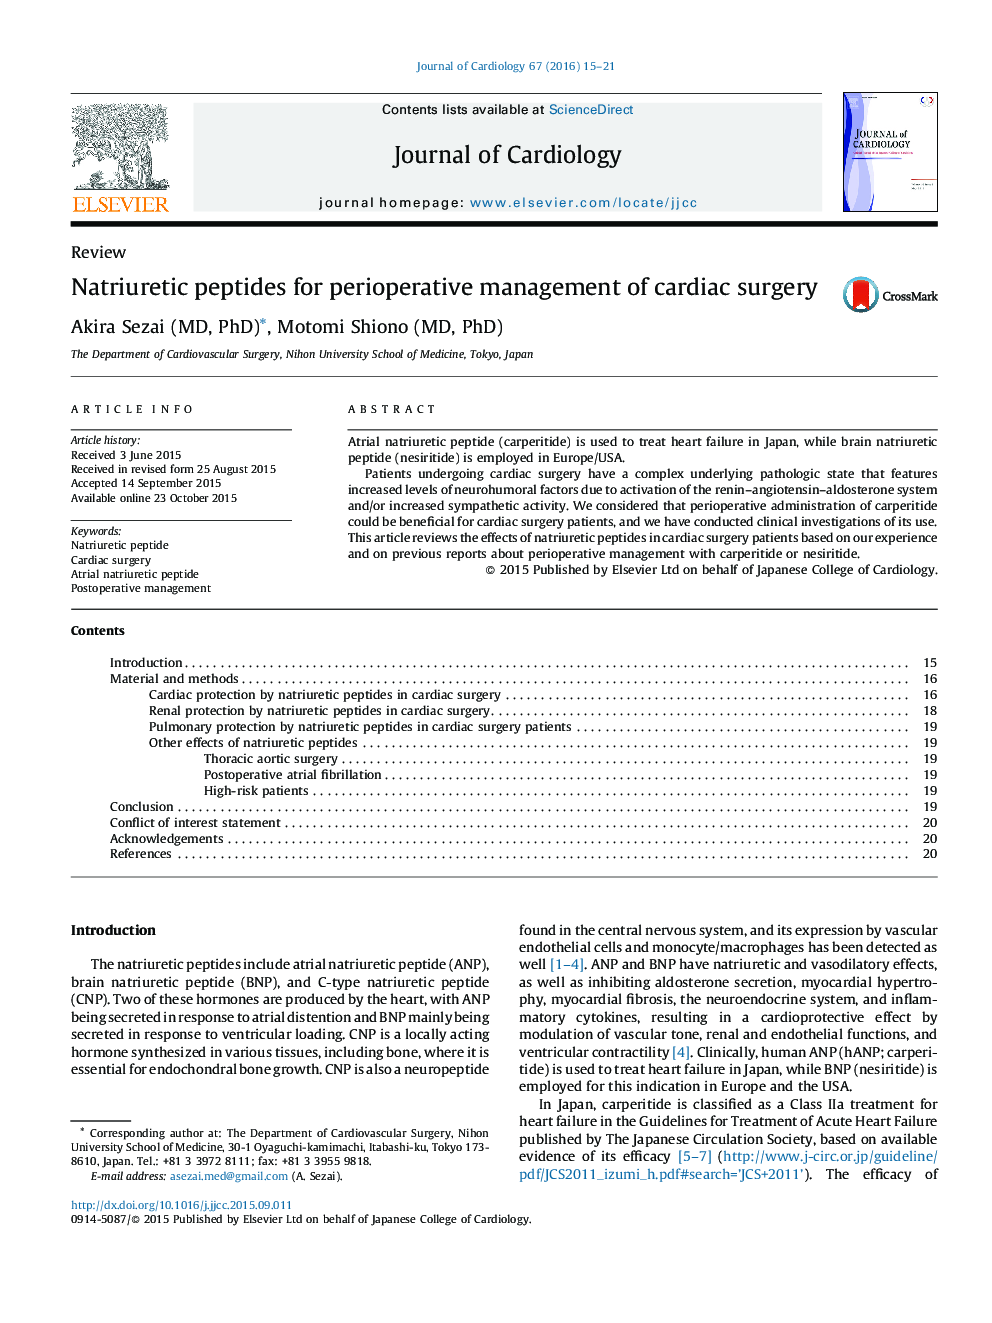 Natriuretic peptides for perioperative management of cardiac surgery